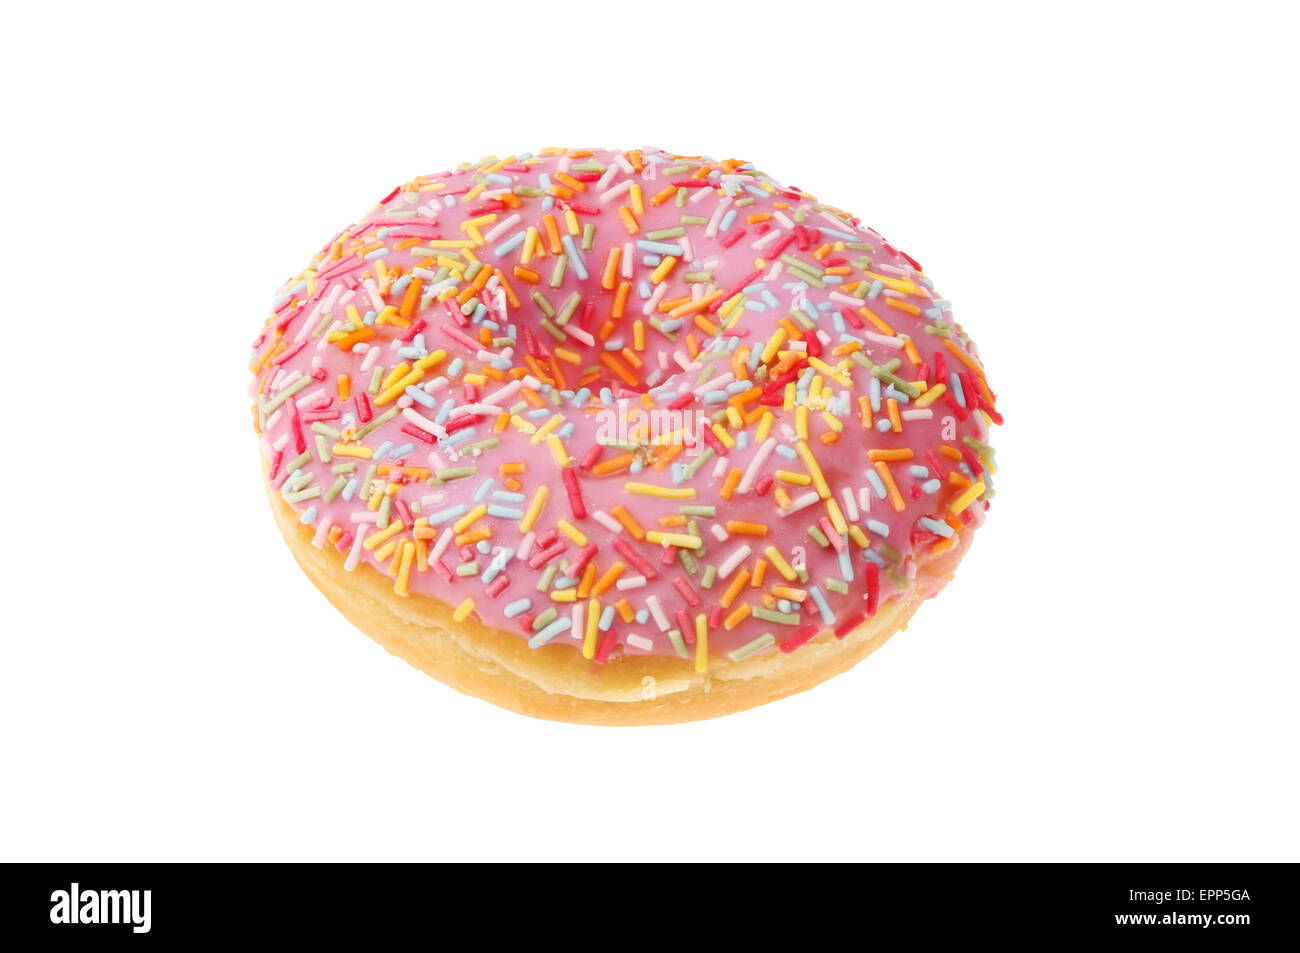 Helado de donut anillo con lloviznas aisladas contra un blanco Foto de stock